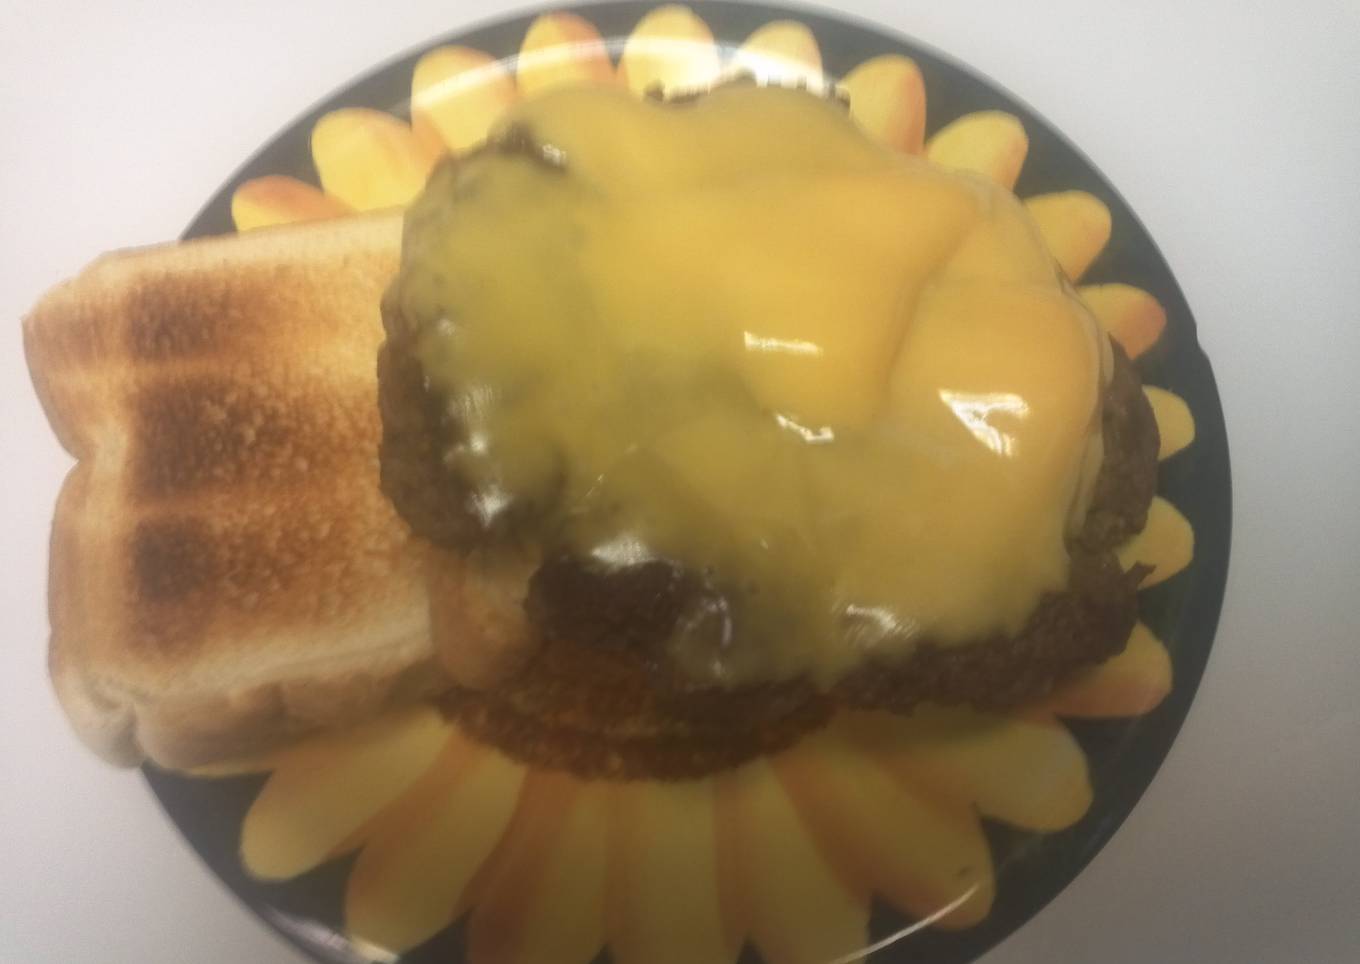 Mom's burger with Texas toast